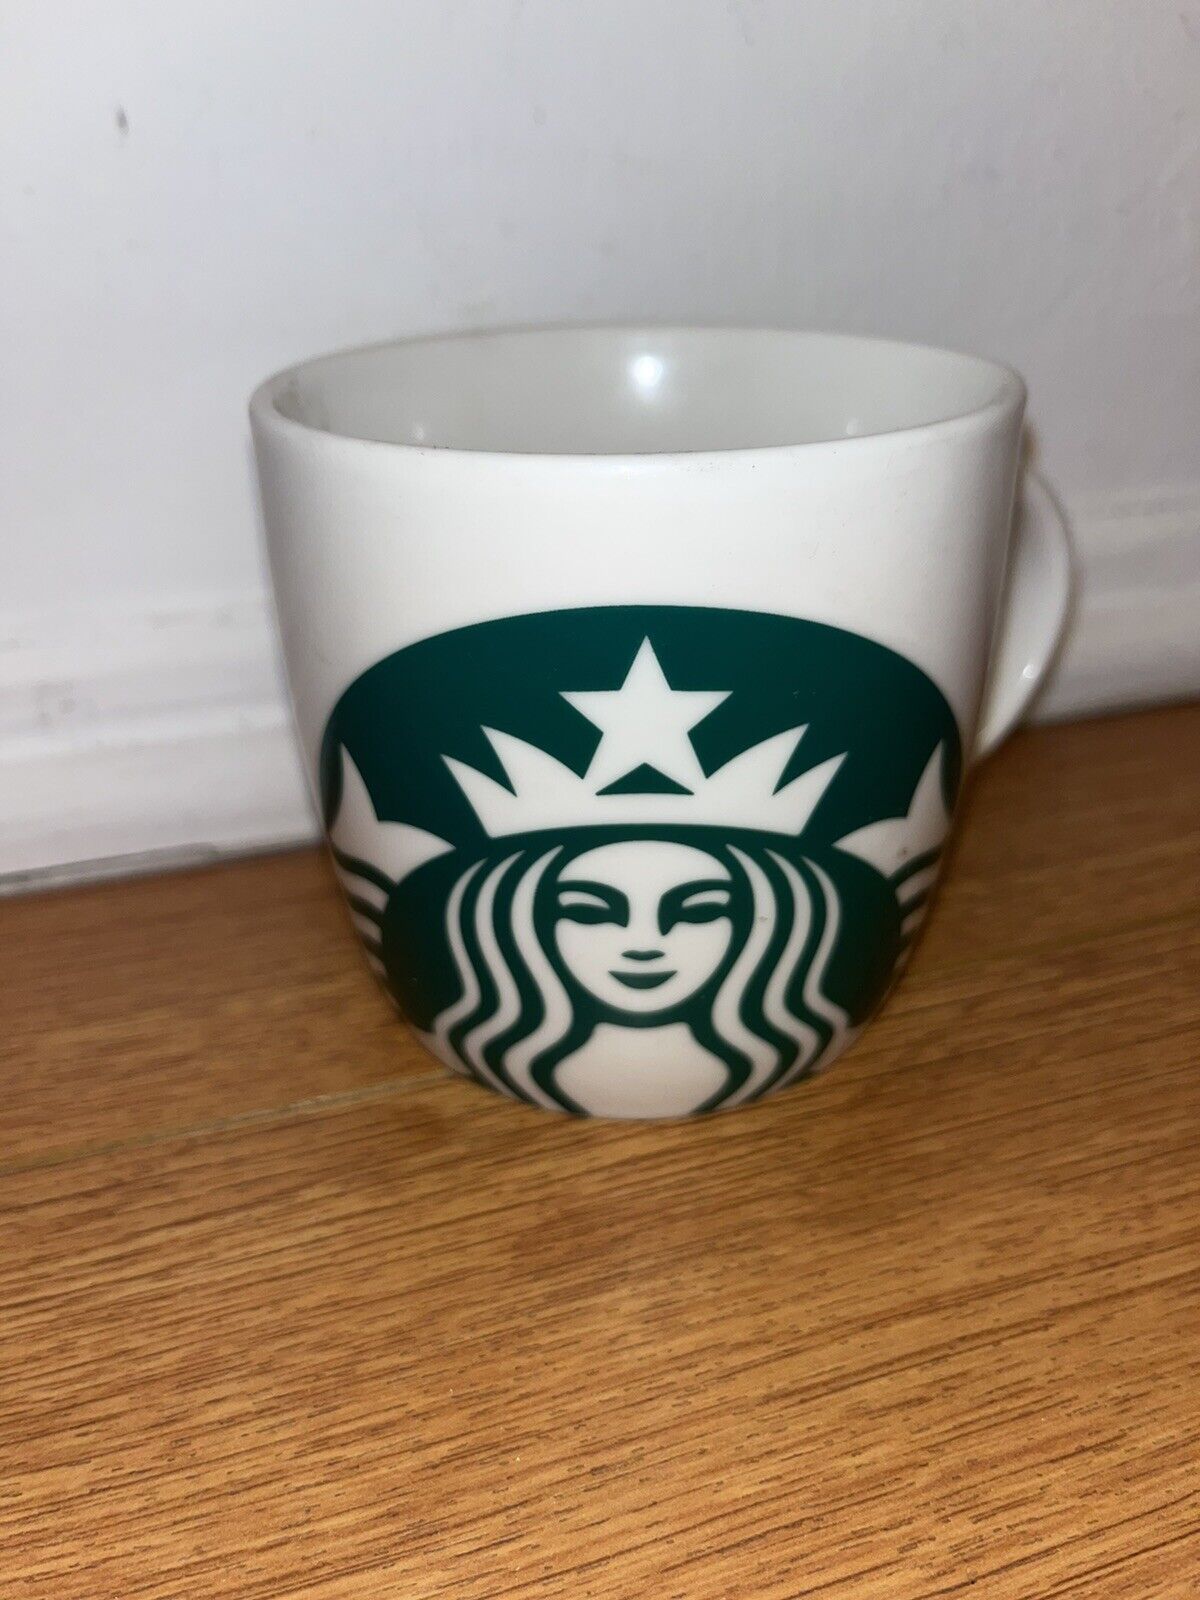 Starbucks 2017 white siren large logo coffe mug 14fl oz